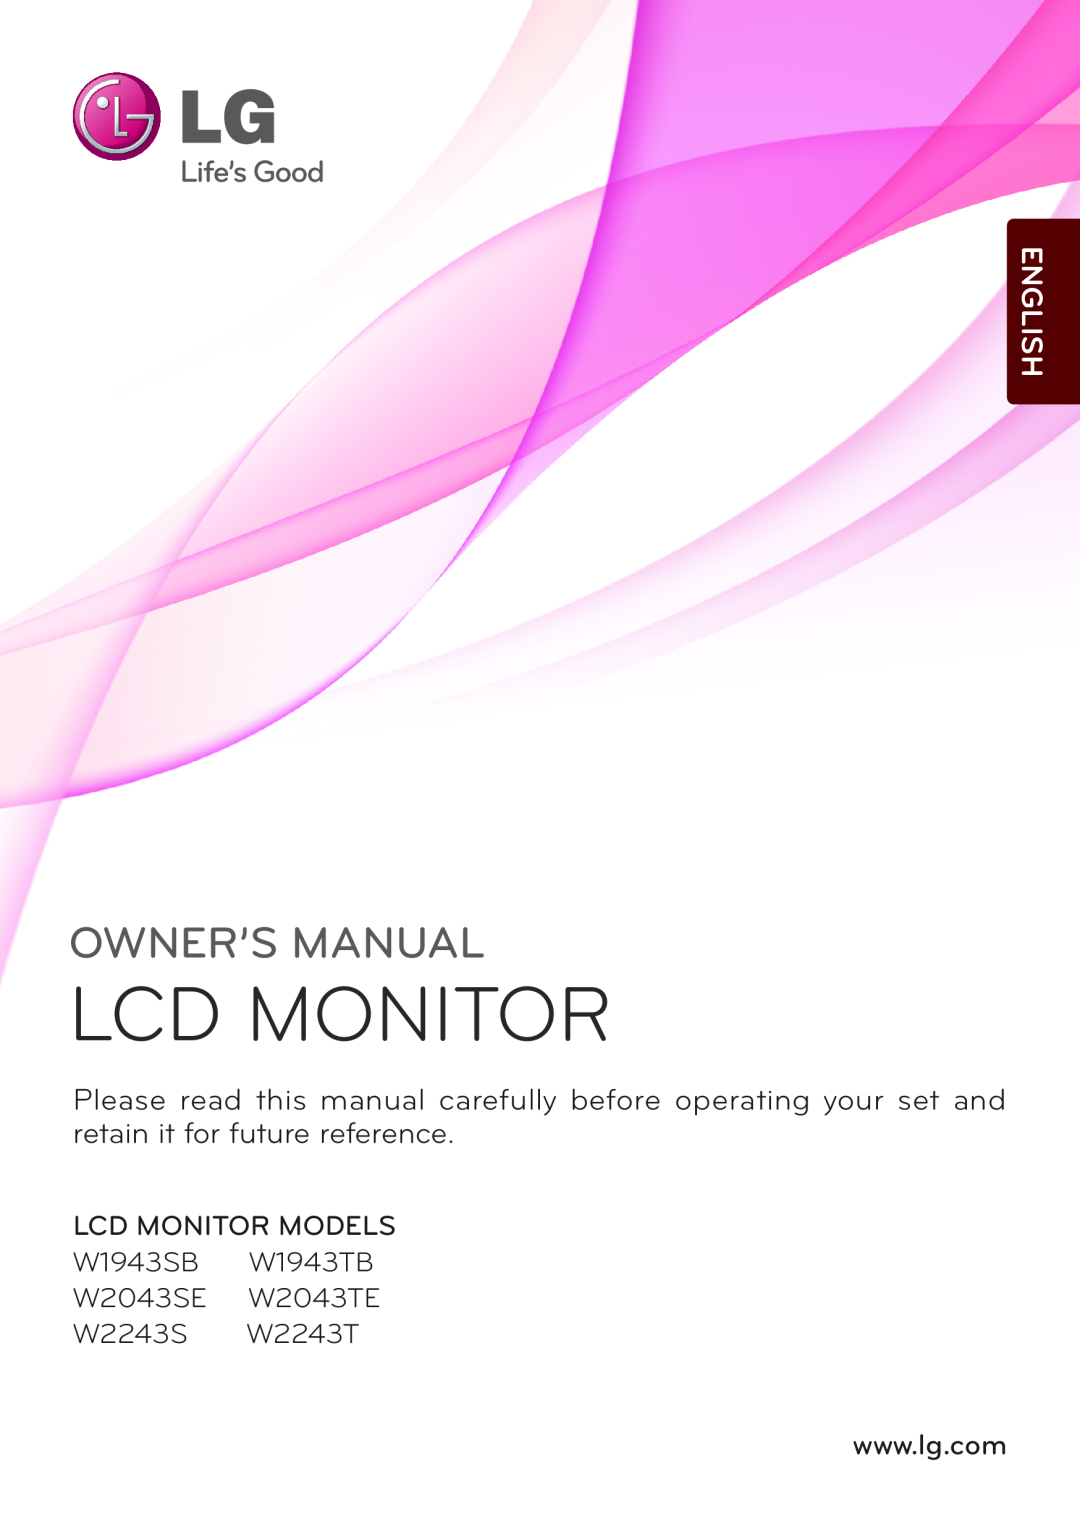 LG Electronics W2043SE, W2043TE, W1943TB, W1943SB, W2243S owner manual Lcd Monitor, Owner’S Manual, English 